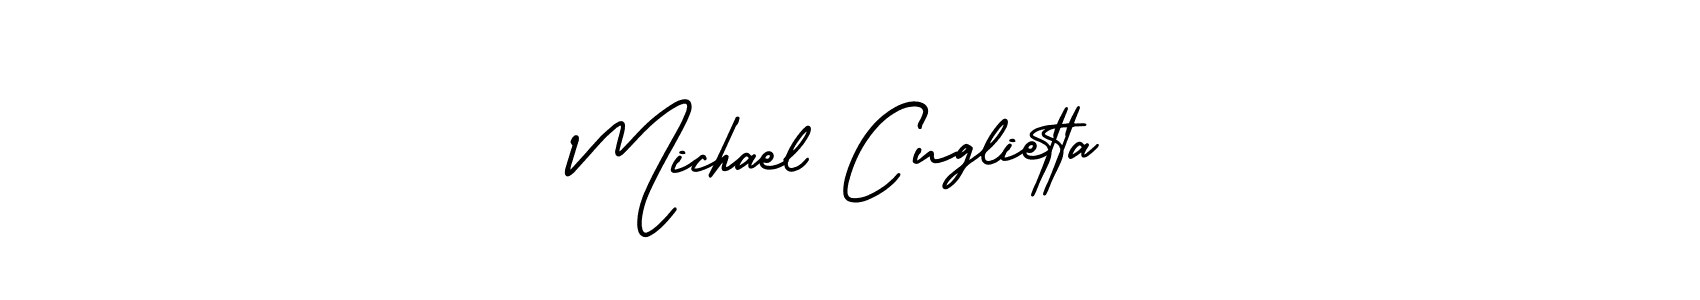 How to Draw Michael Cuglietta signature style? AmerikaSignatureDemo-Regular is a latest design signature styles for name Michael Cuglietta. Michael Cuglietta signature style 3 images and pictures png